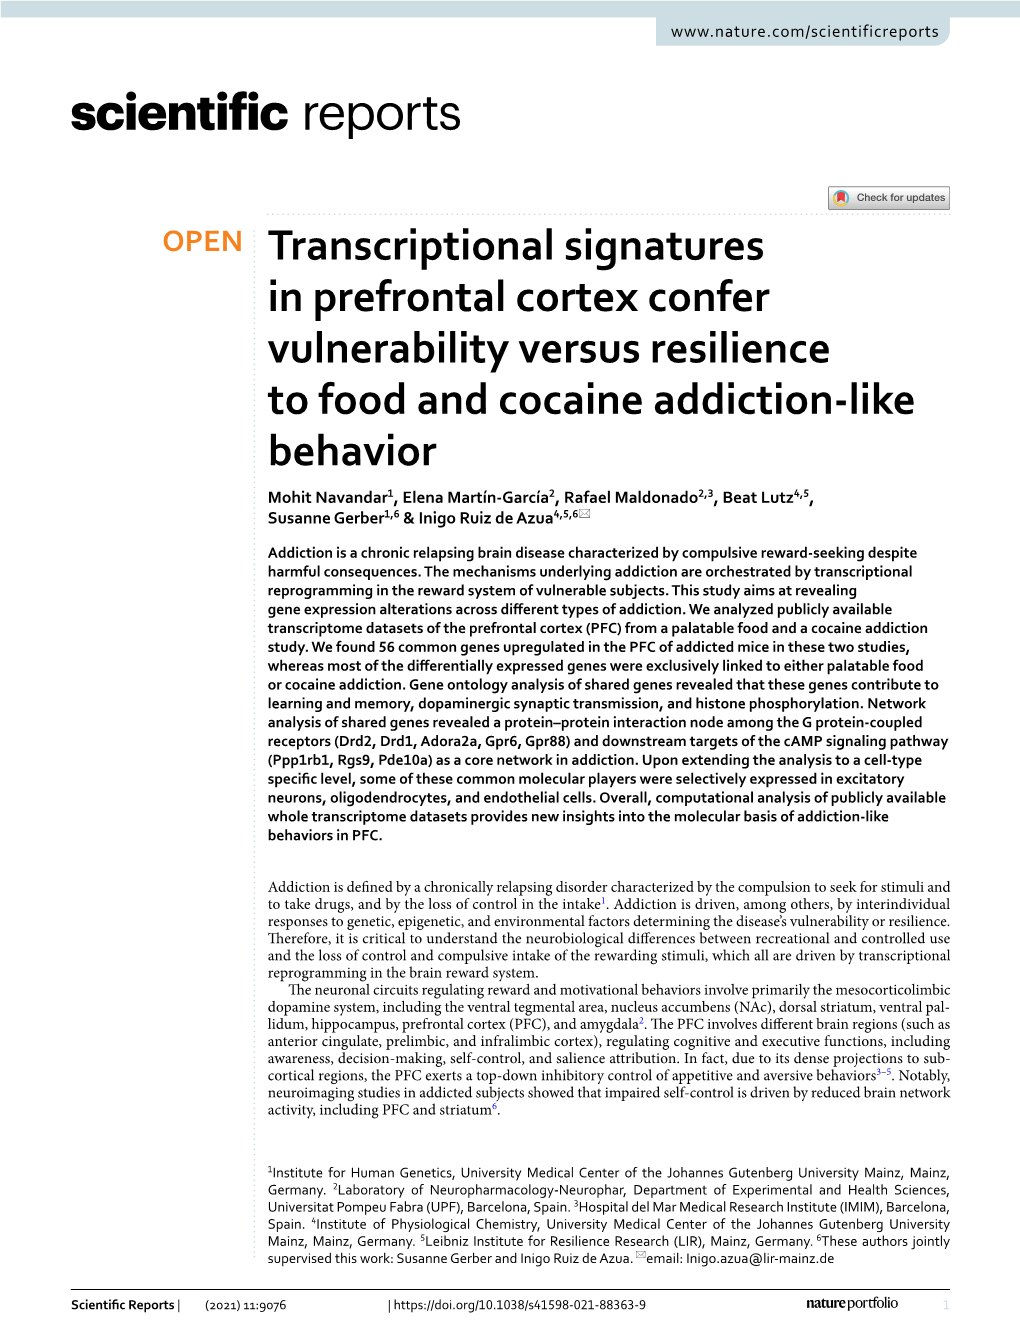 Transcriptional Signatures in Prefrontal Cortex Confer Vulnerability Versus